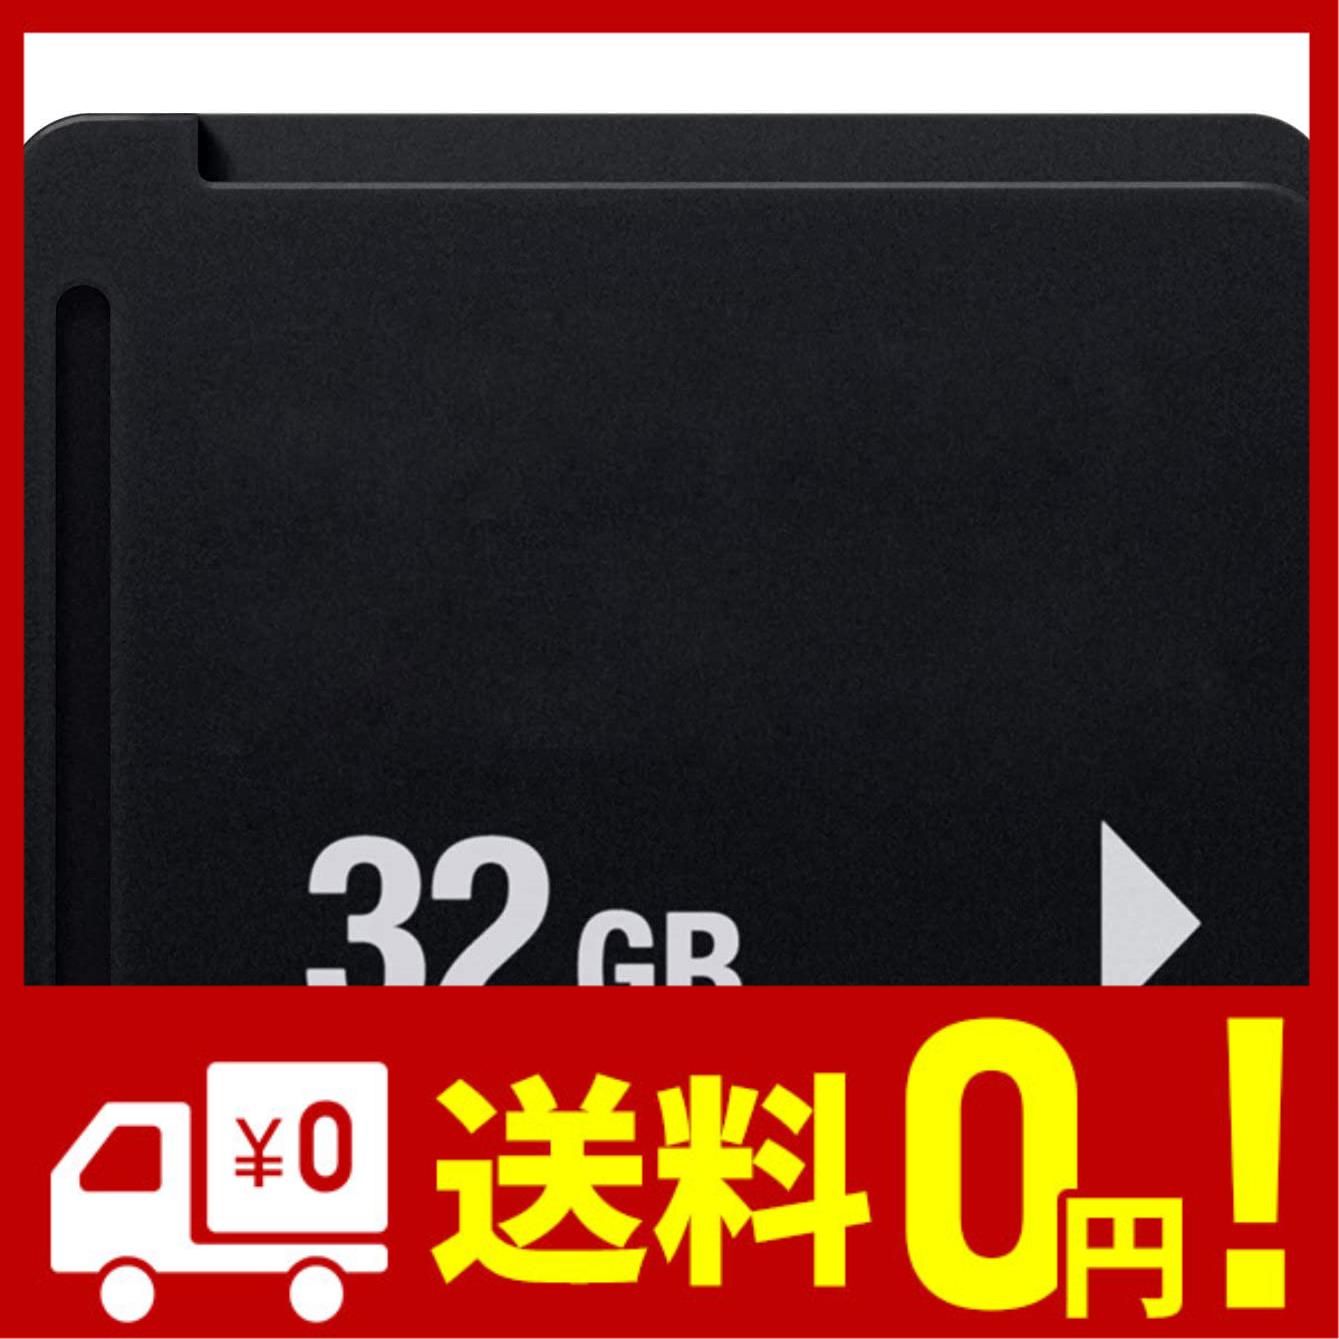 OSTENT メモリーカード スティックストレージ Sony PS Vita PSV 1000 2000 PCH-Z041 Z081 Z161 Z321 Z641に適用 32GB